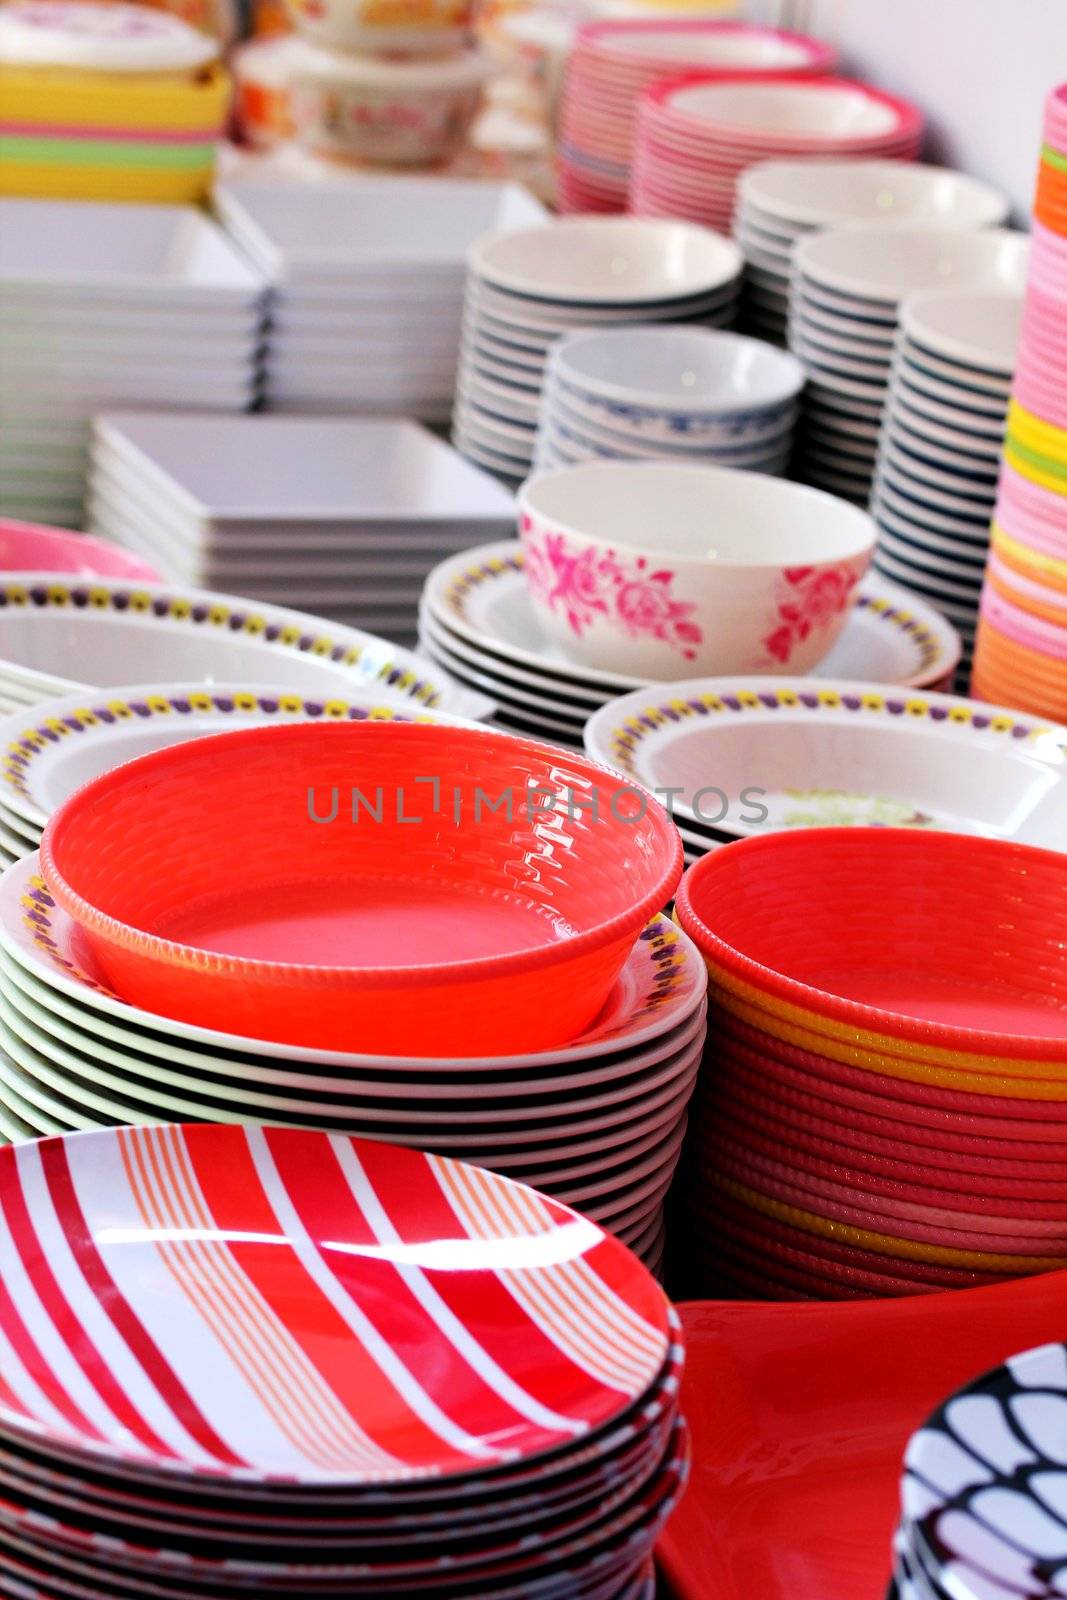 Colorful melamine, ceramic and plastic bowls by mnsanthoshkumar